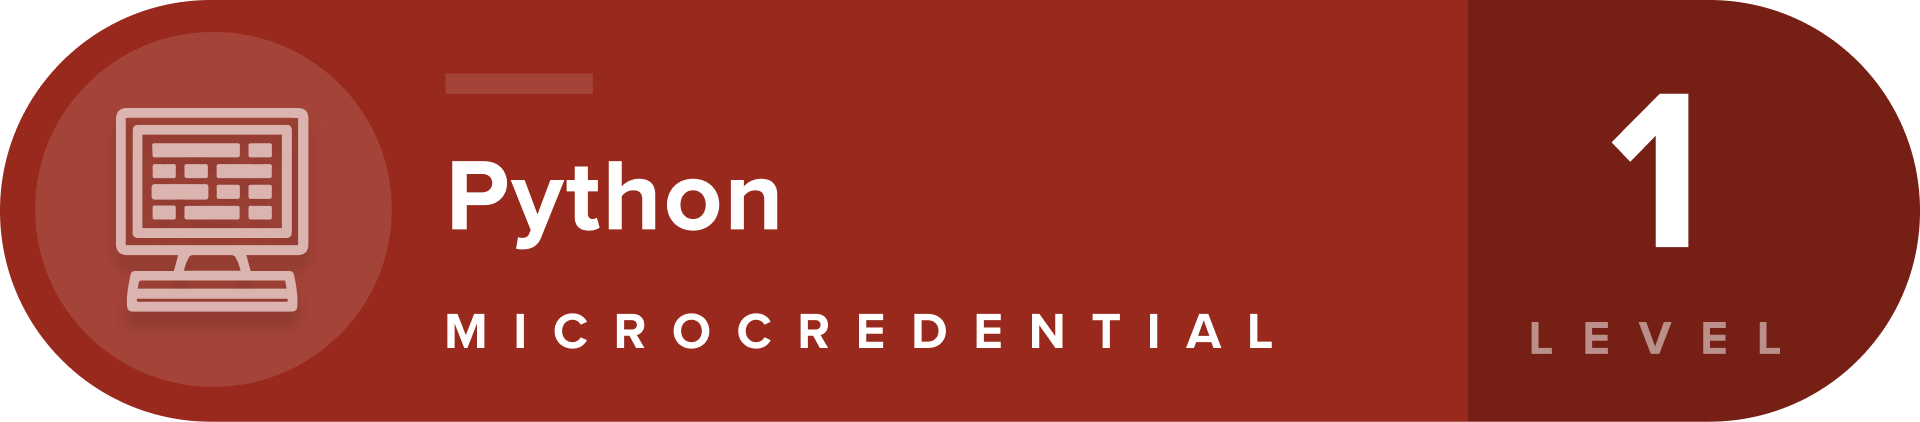 Python microcredentials level 1 badge